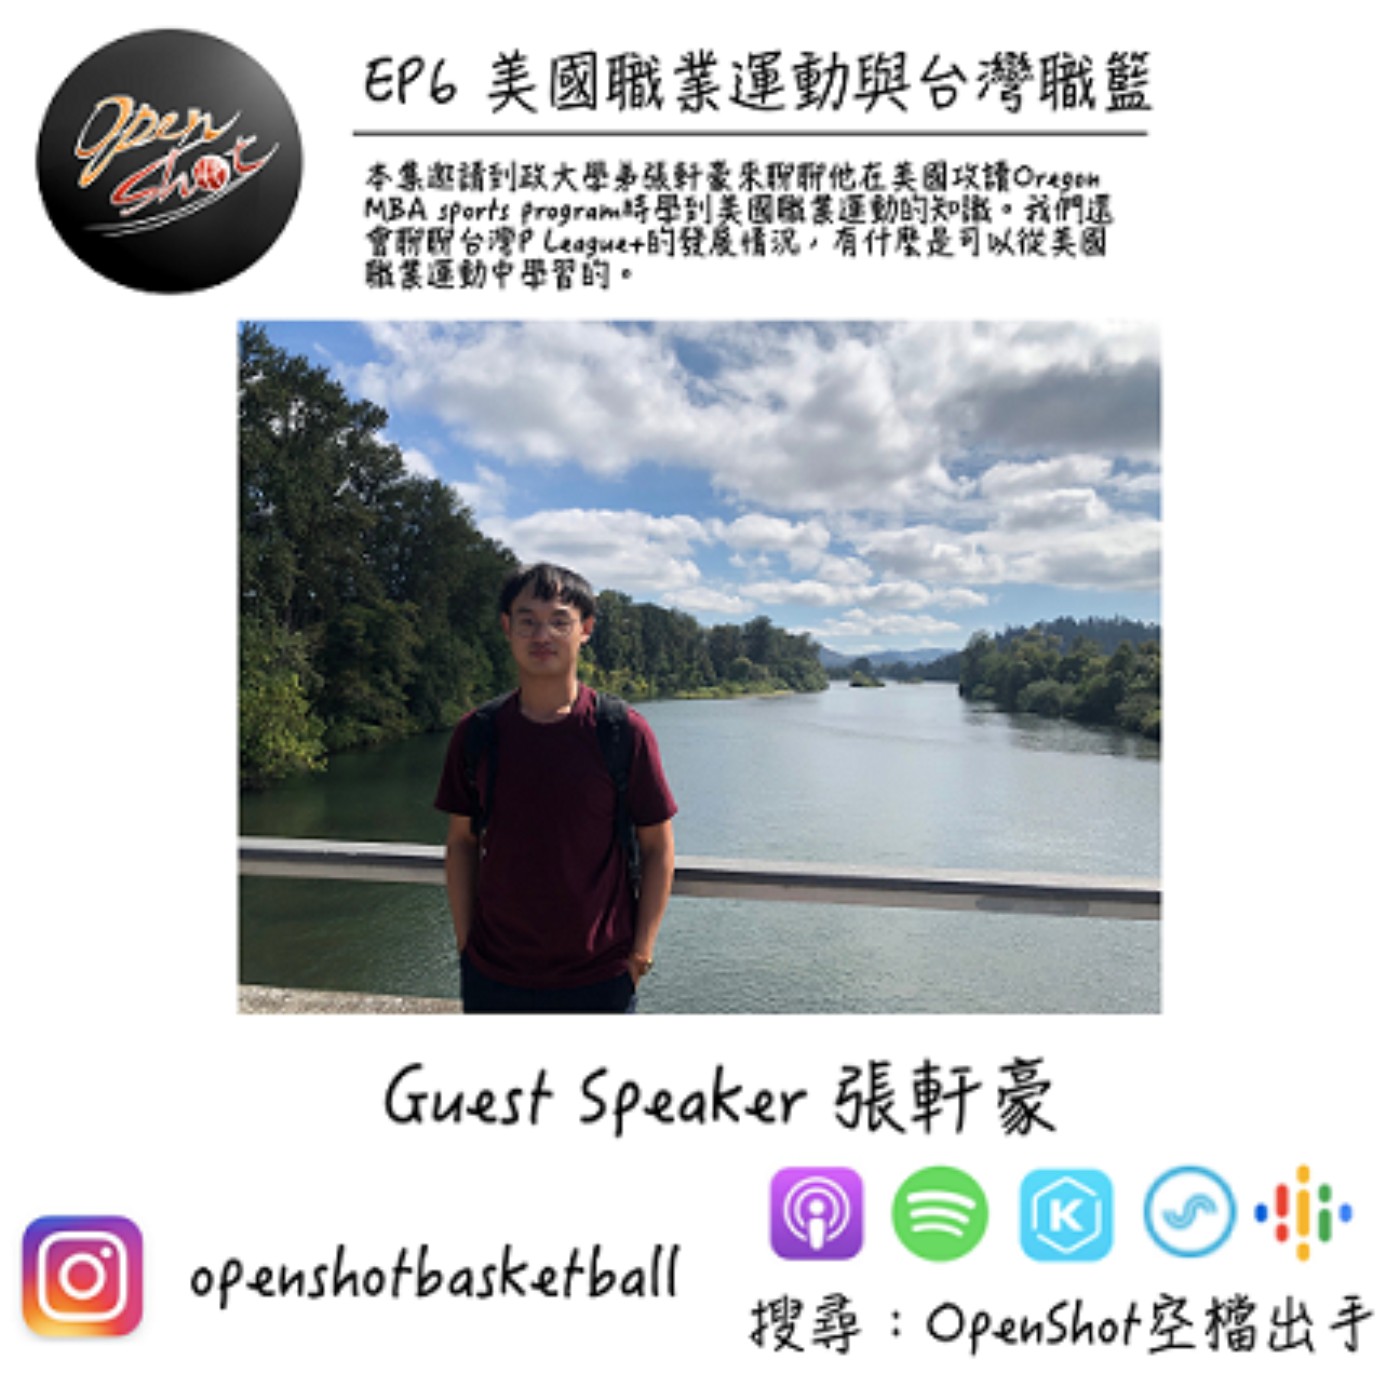 EP6 美國職業運動與台灣職籃｜Guest speaker：張軒豪